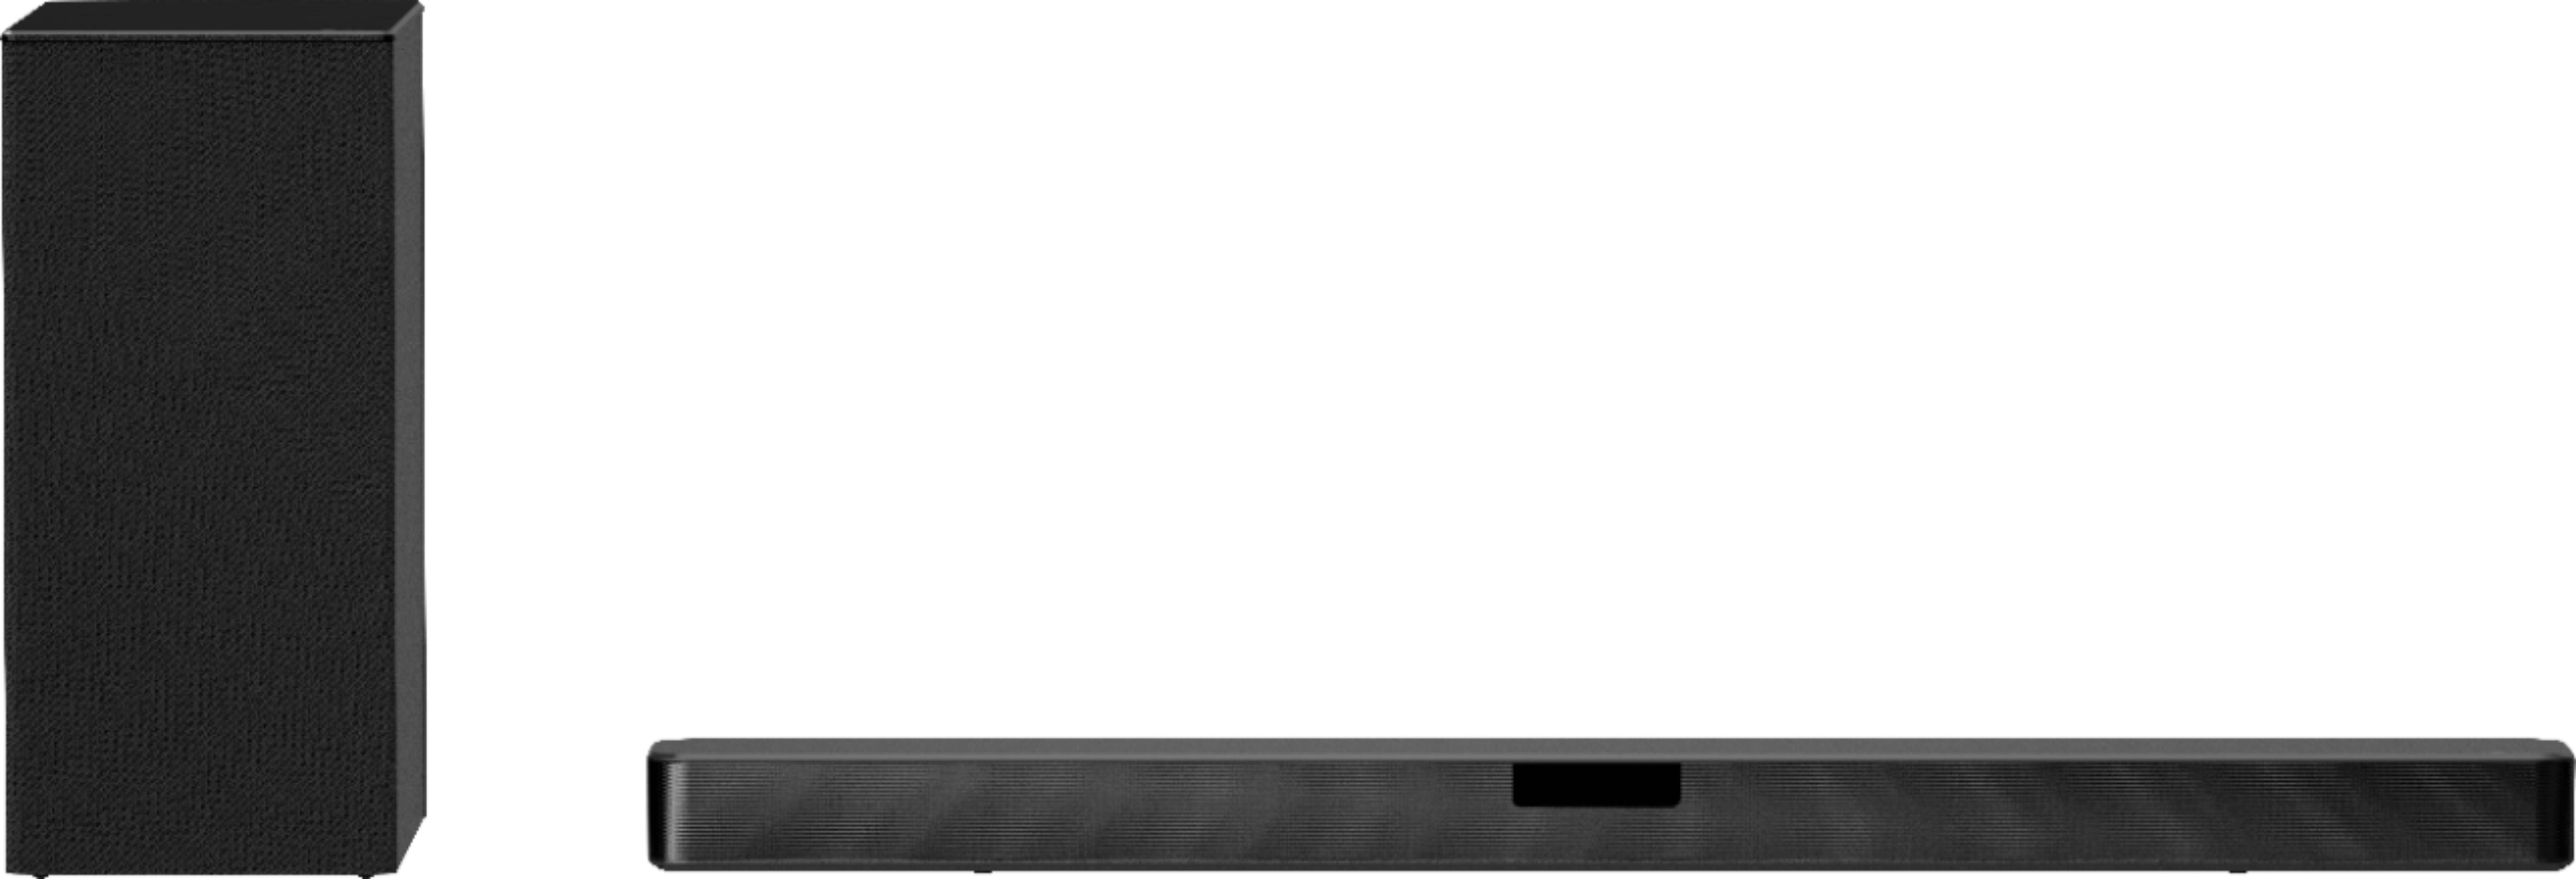 LG SH3B 300 Watt 2.1 Channel Bluetooth Enabled Sound Bar with Wireless Subwoofer